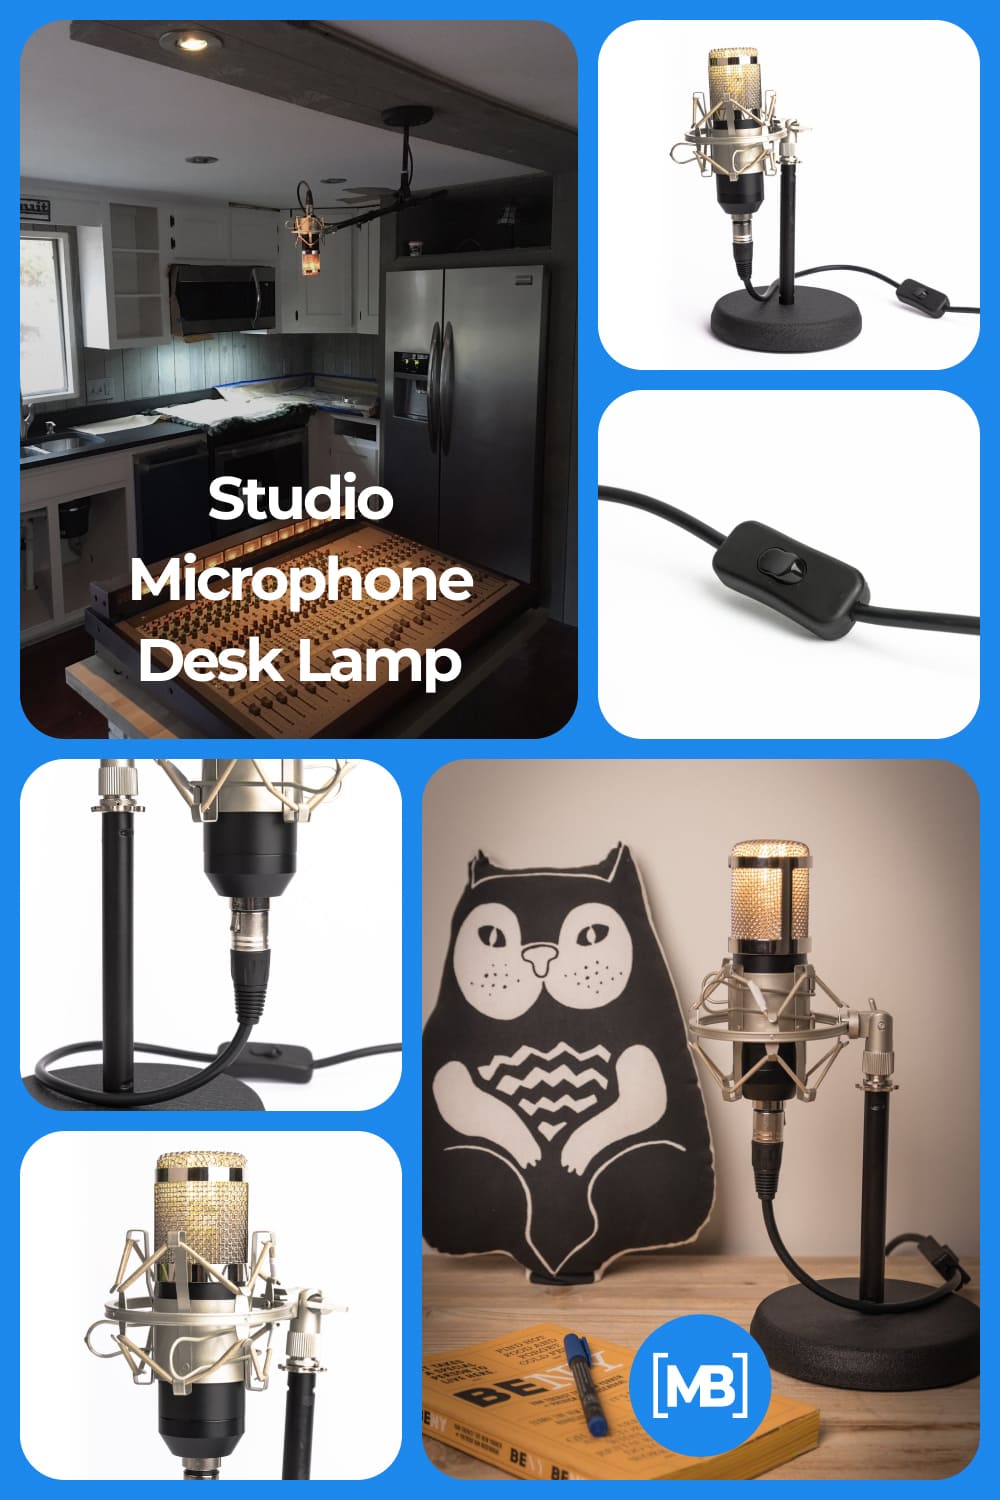 Studio Microphone Desk Lamp.